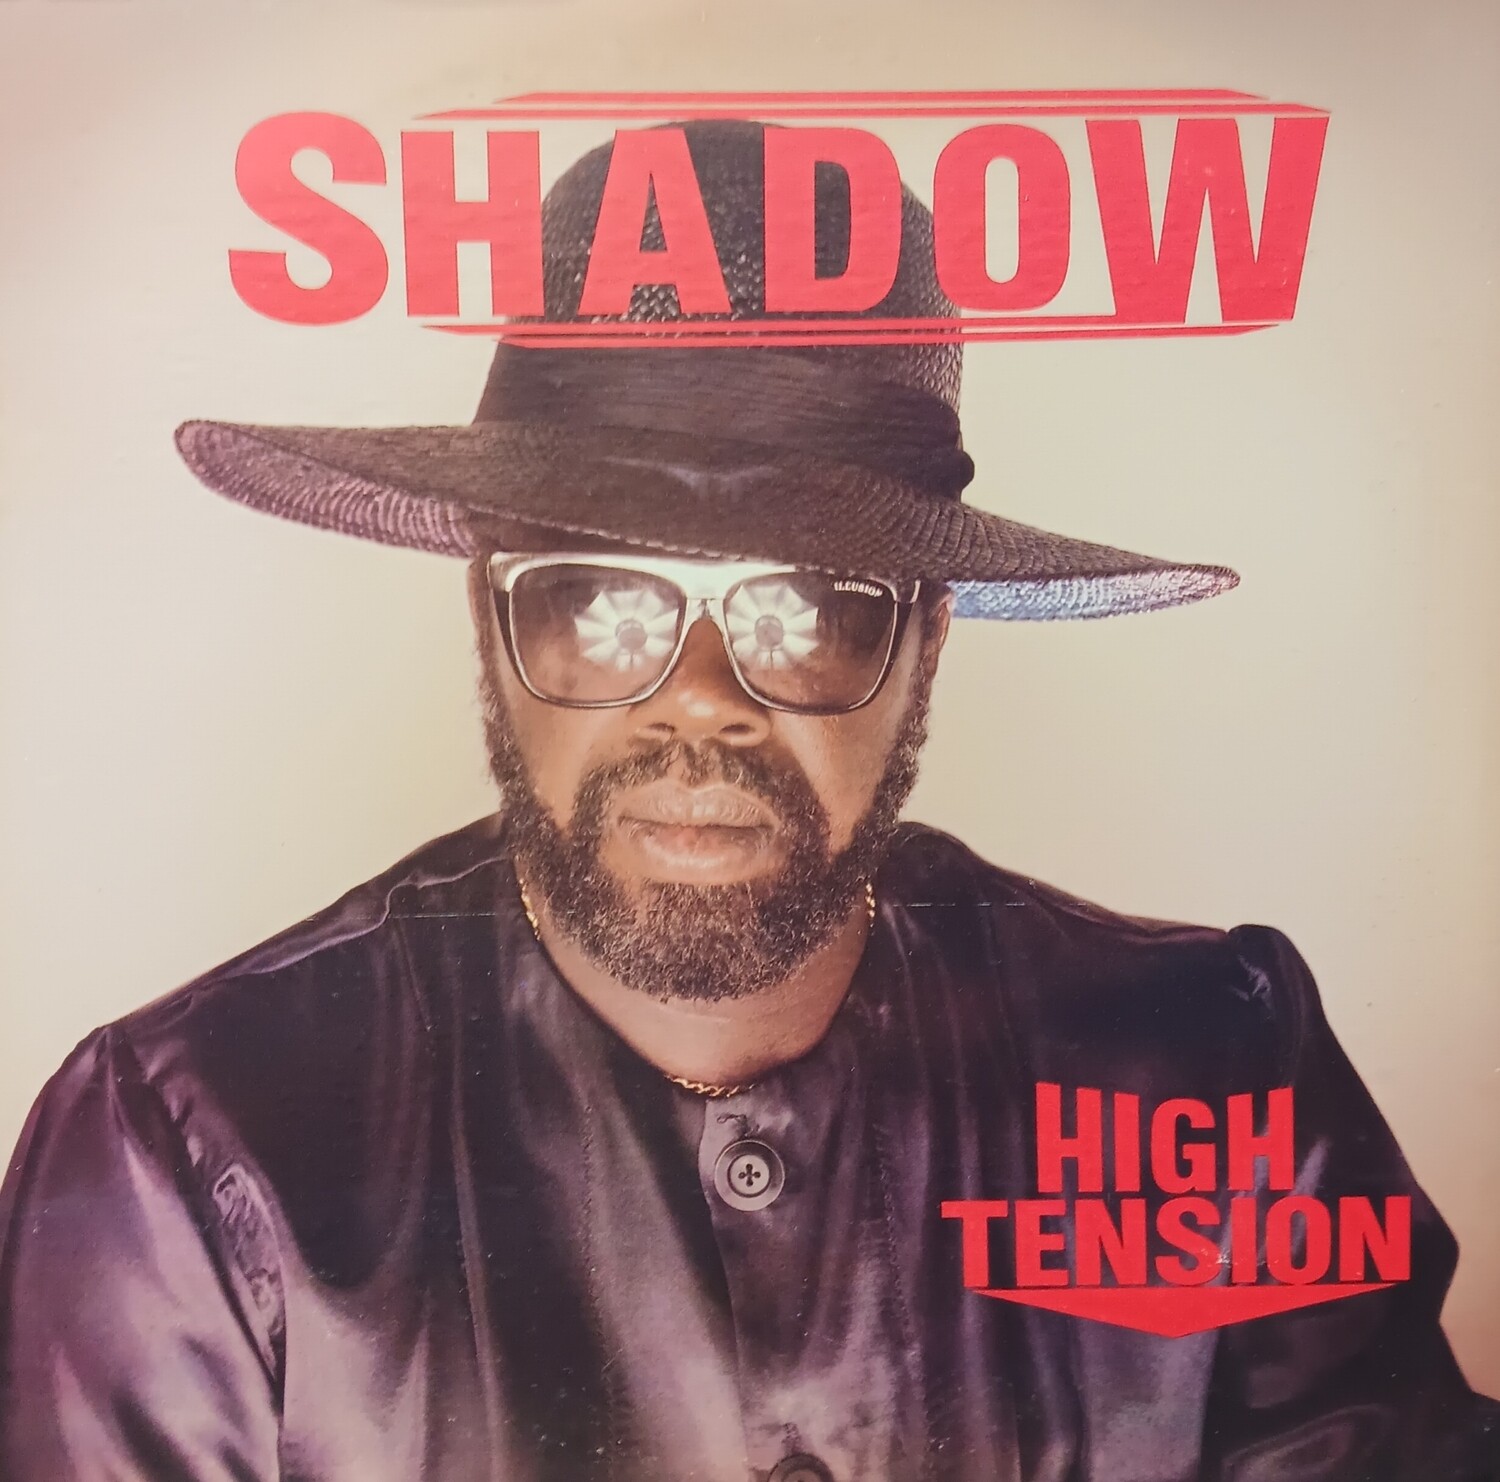 SHADOW - High Tension